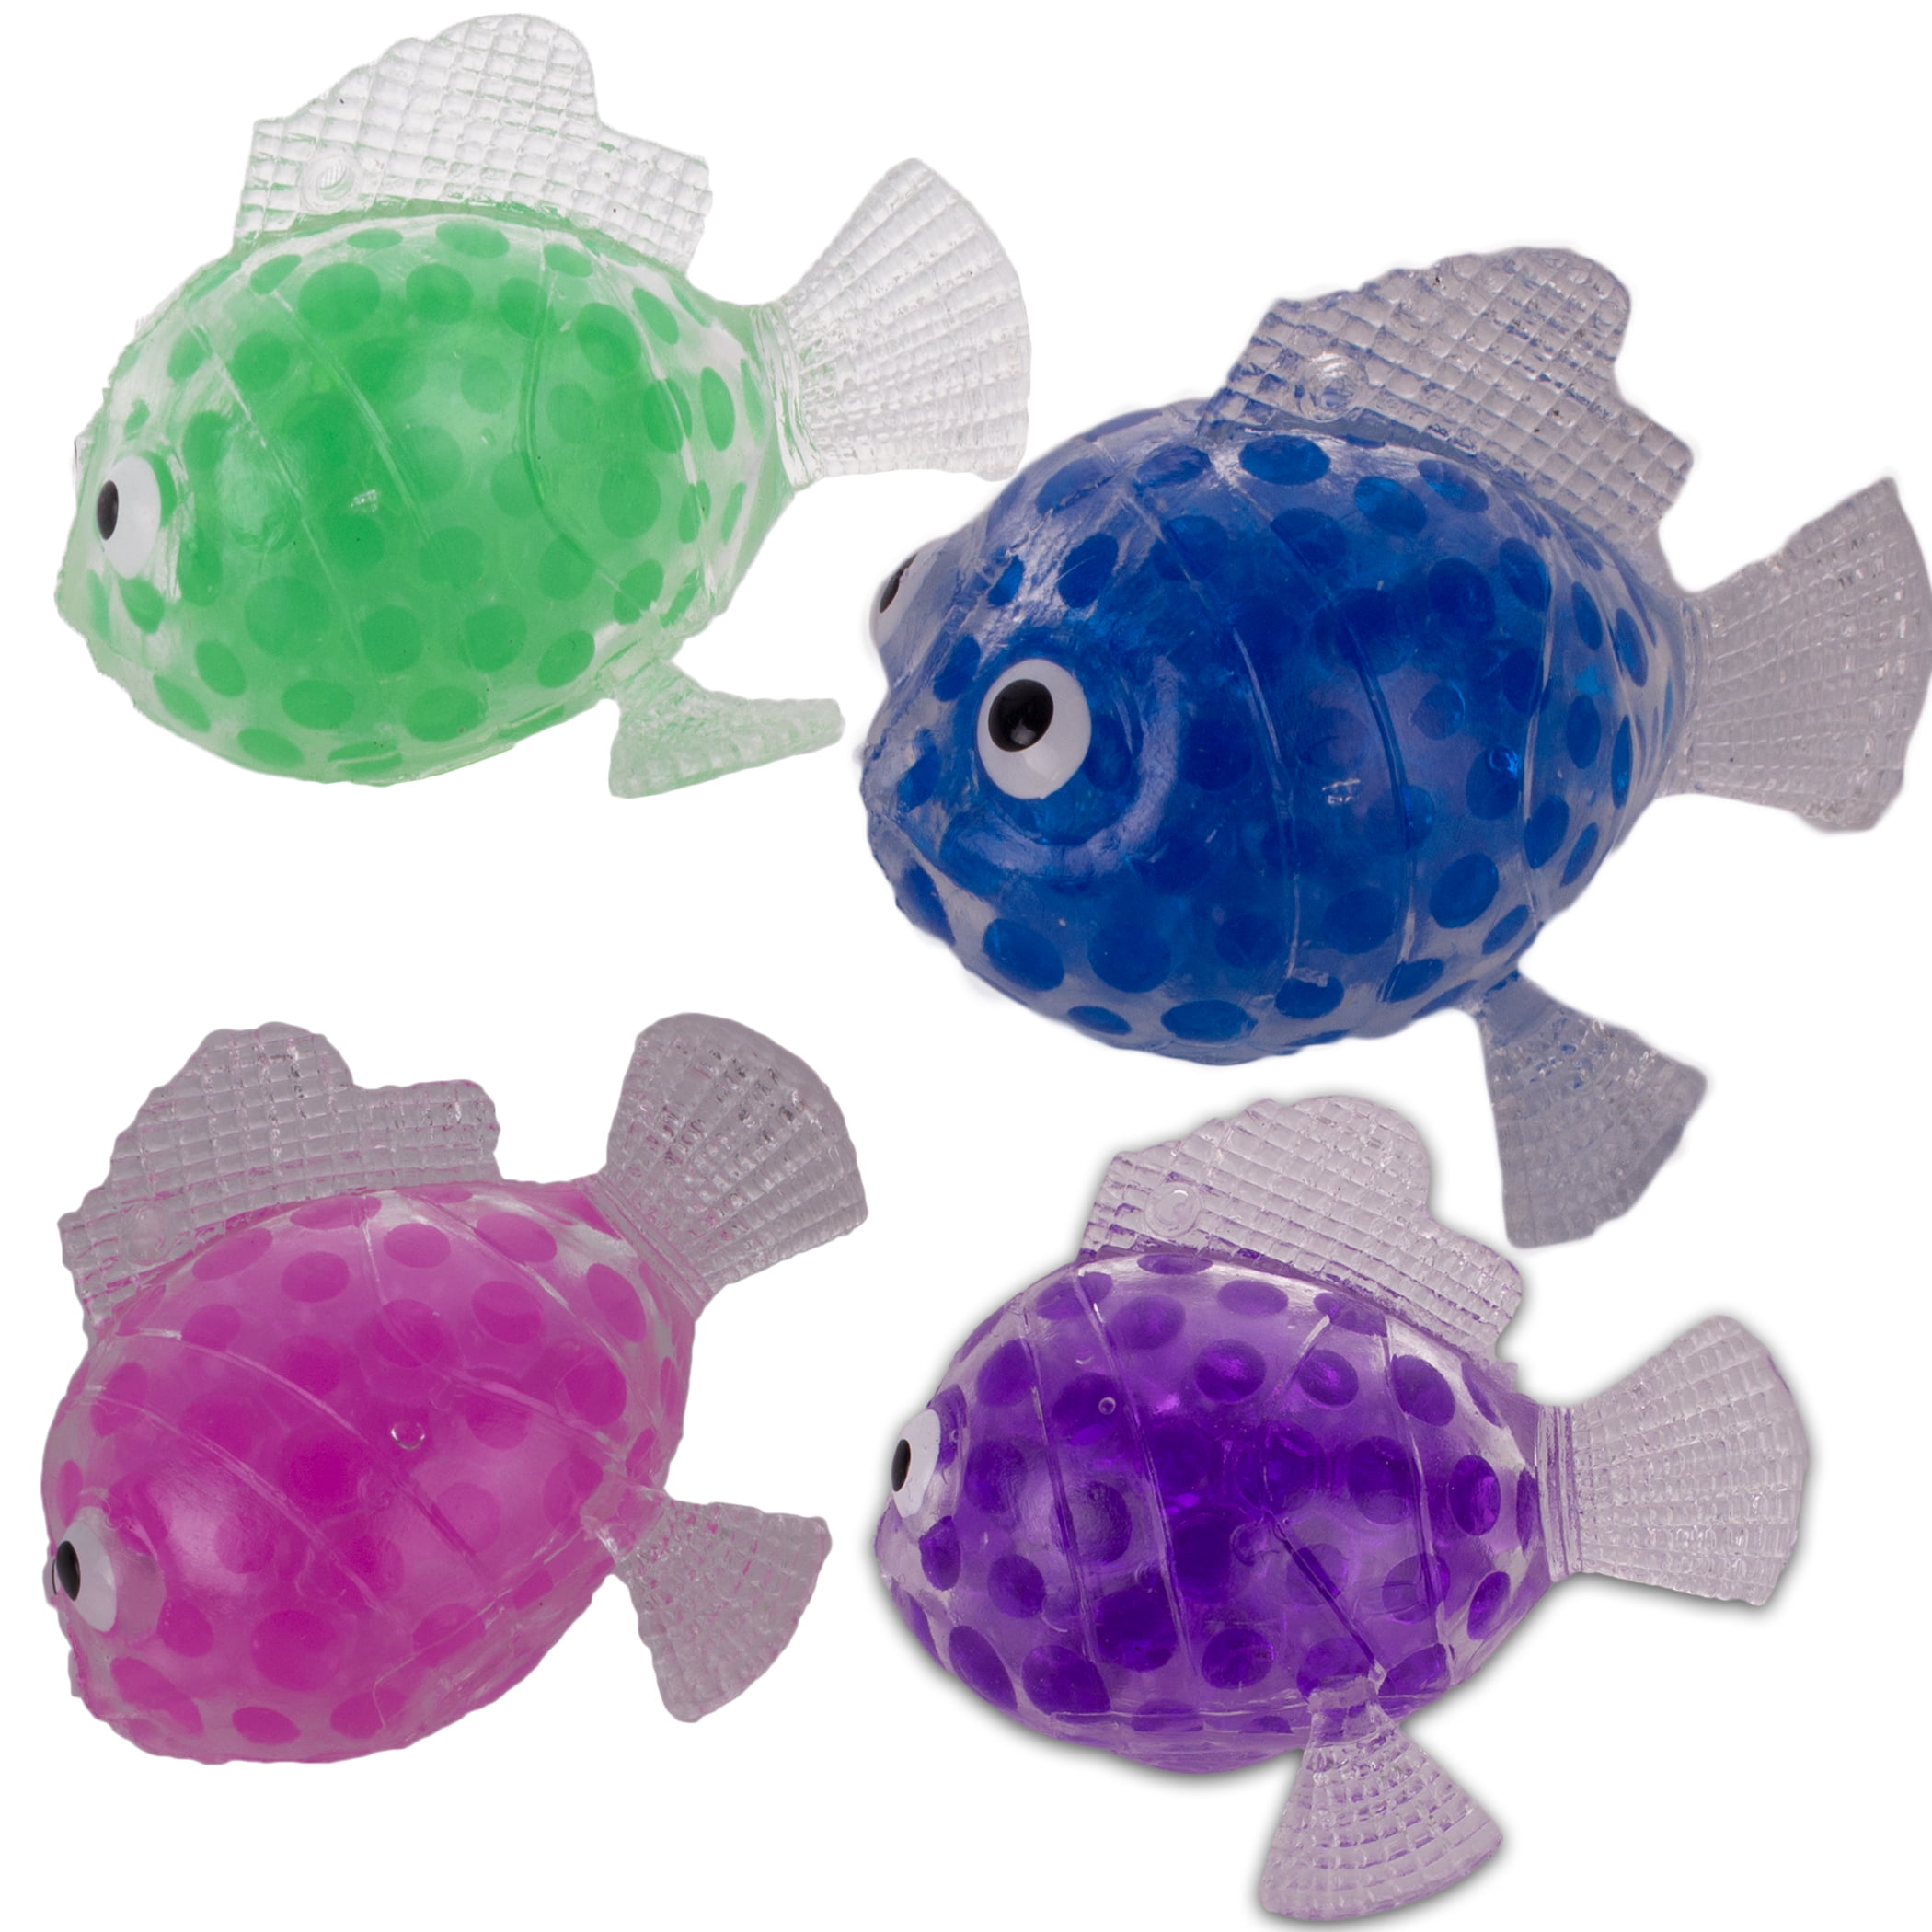 fish squishy toy